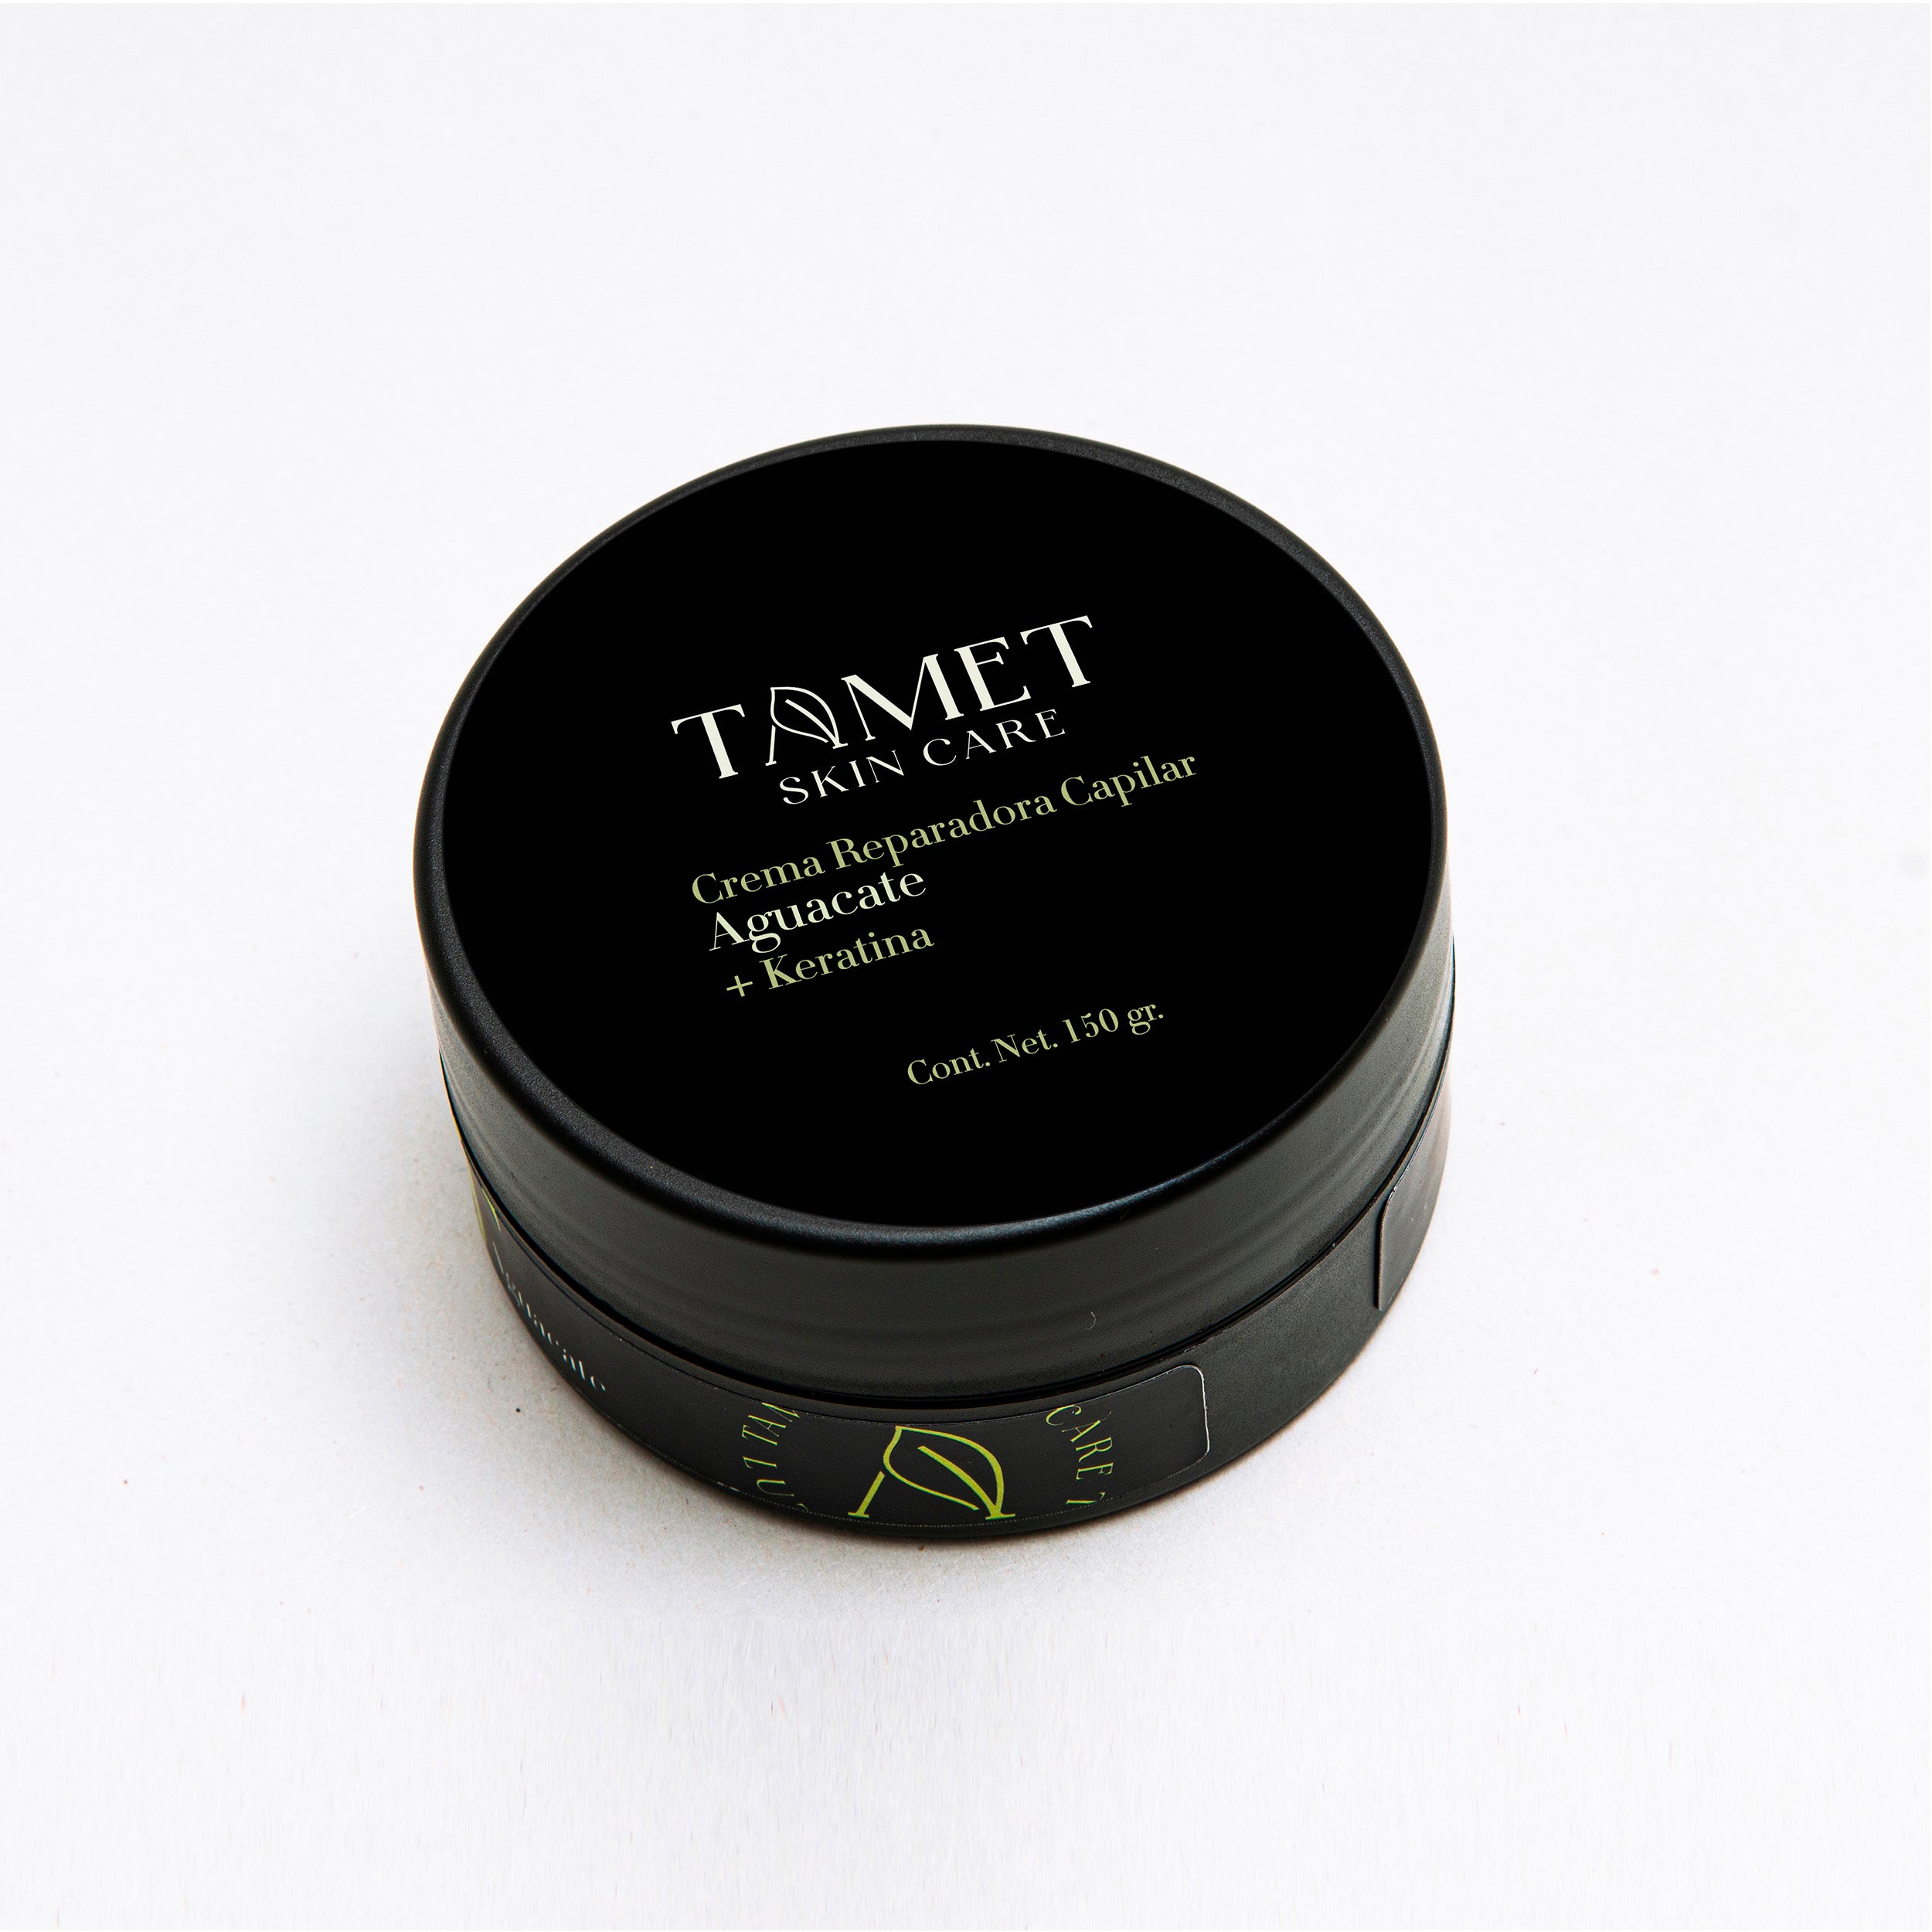 Tamet- Crema capilar